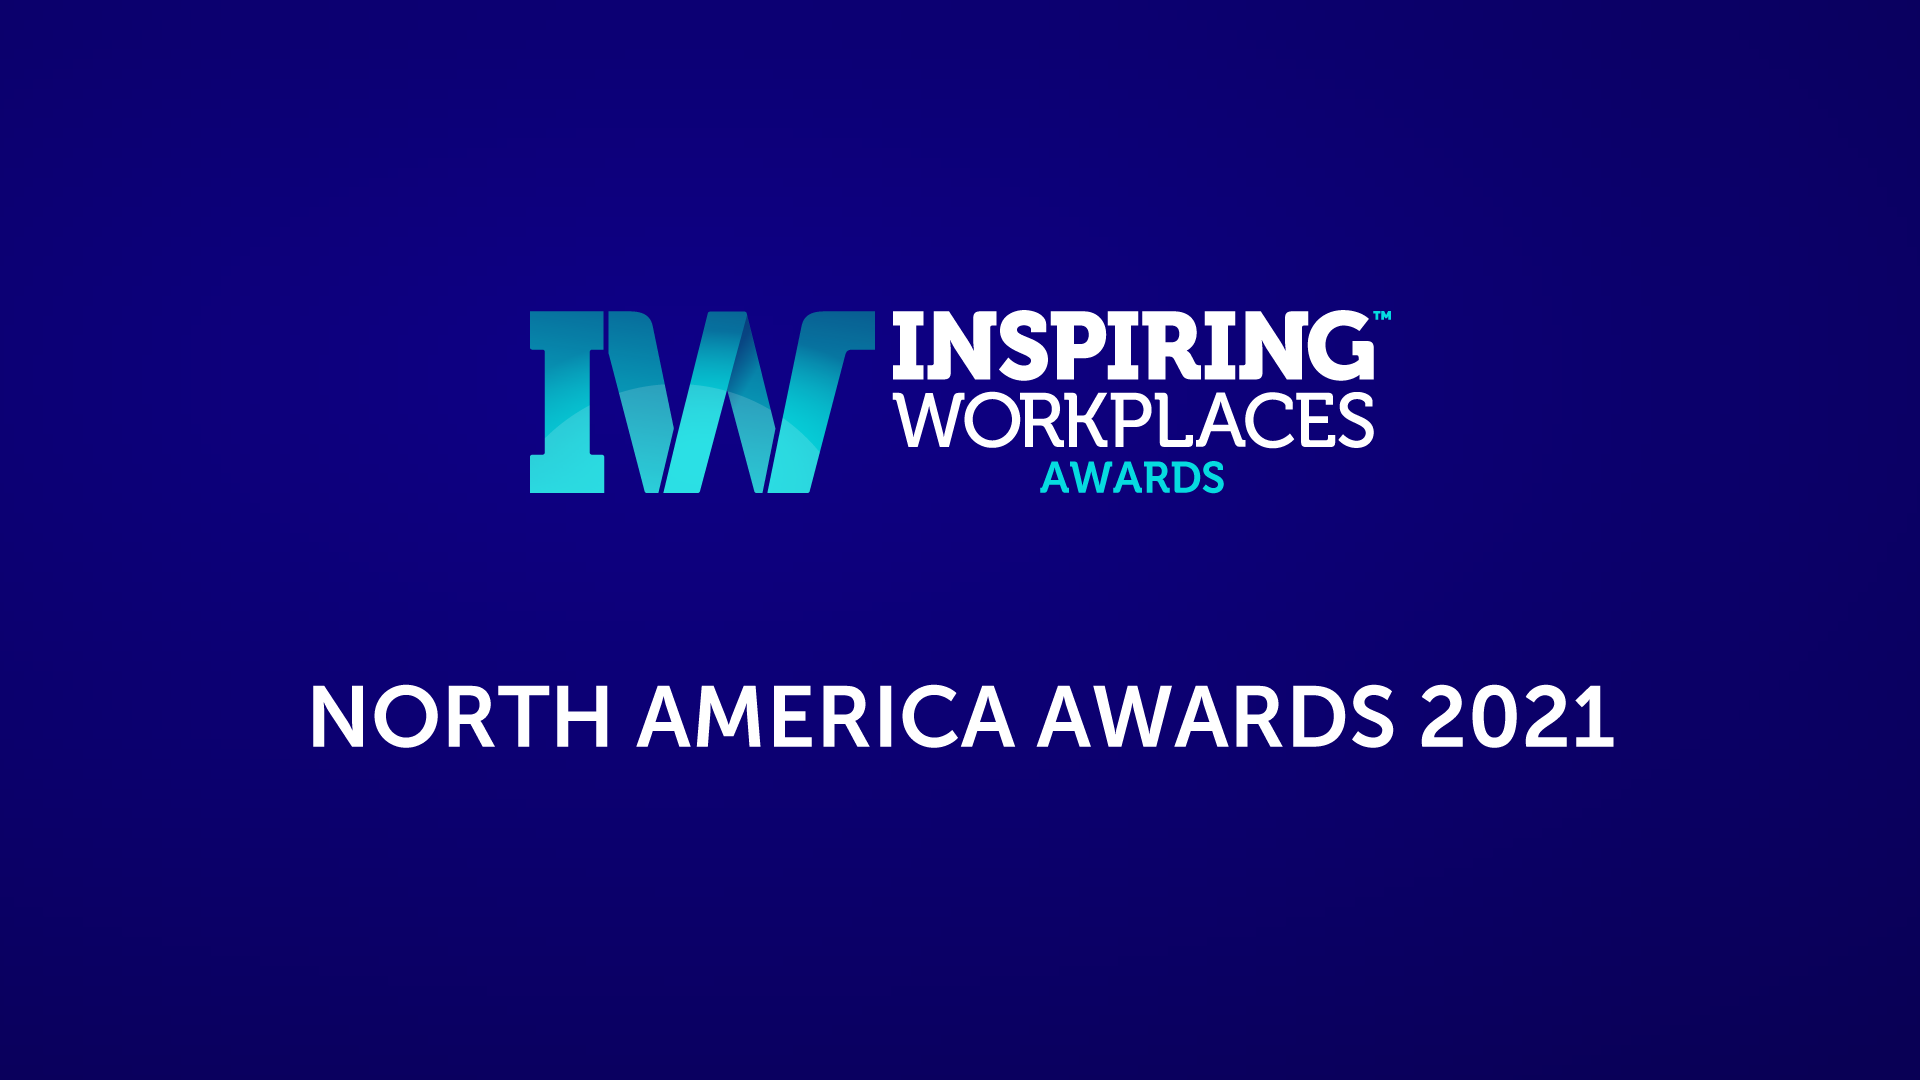 Inspiring Workplaces Awards North America 2021 Virtual Ceremony